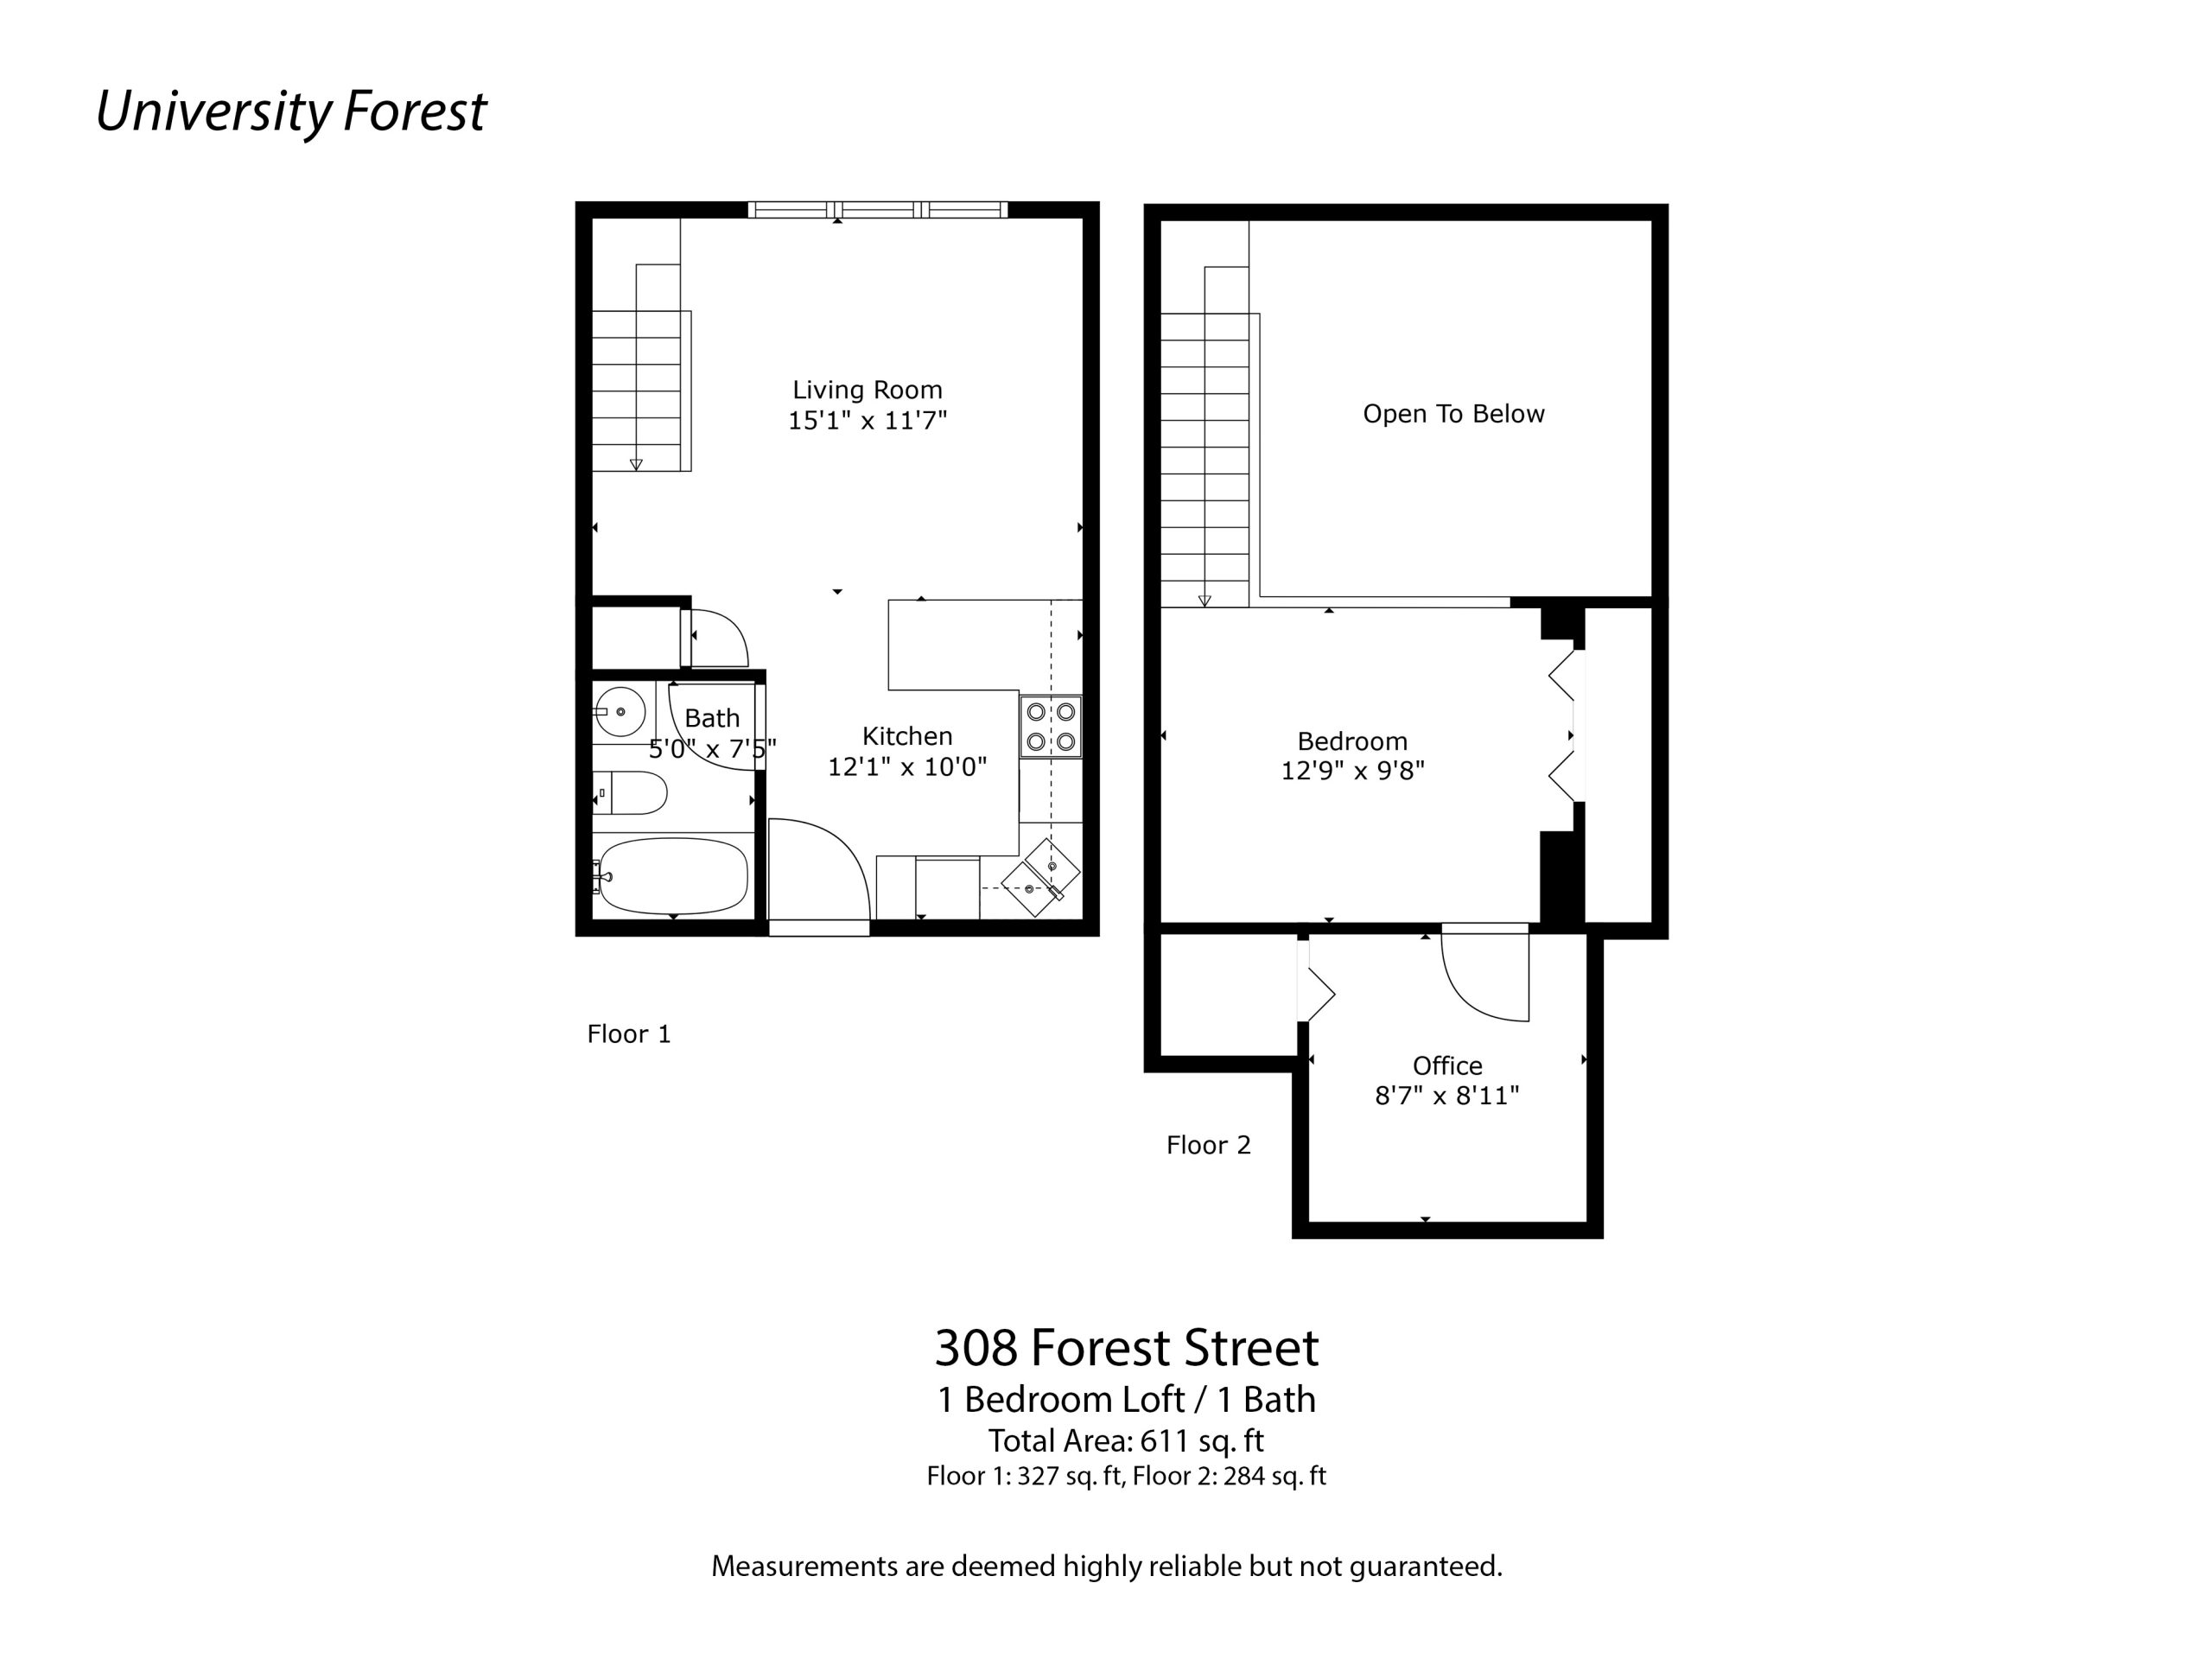 University Forest 1 Bedroom + Loft floor plans